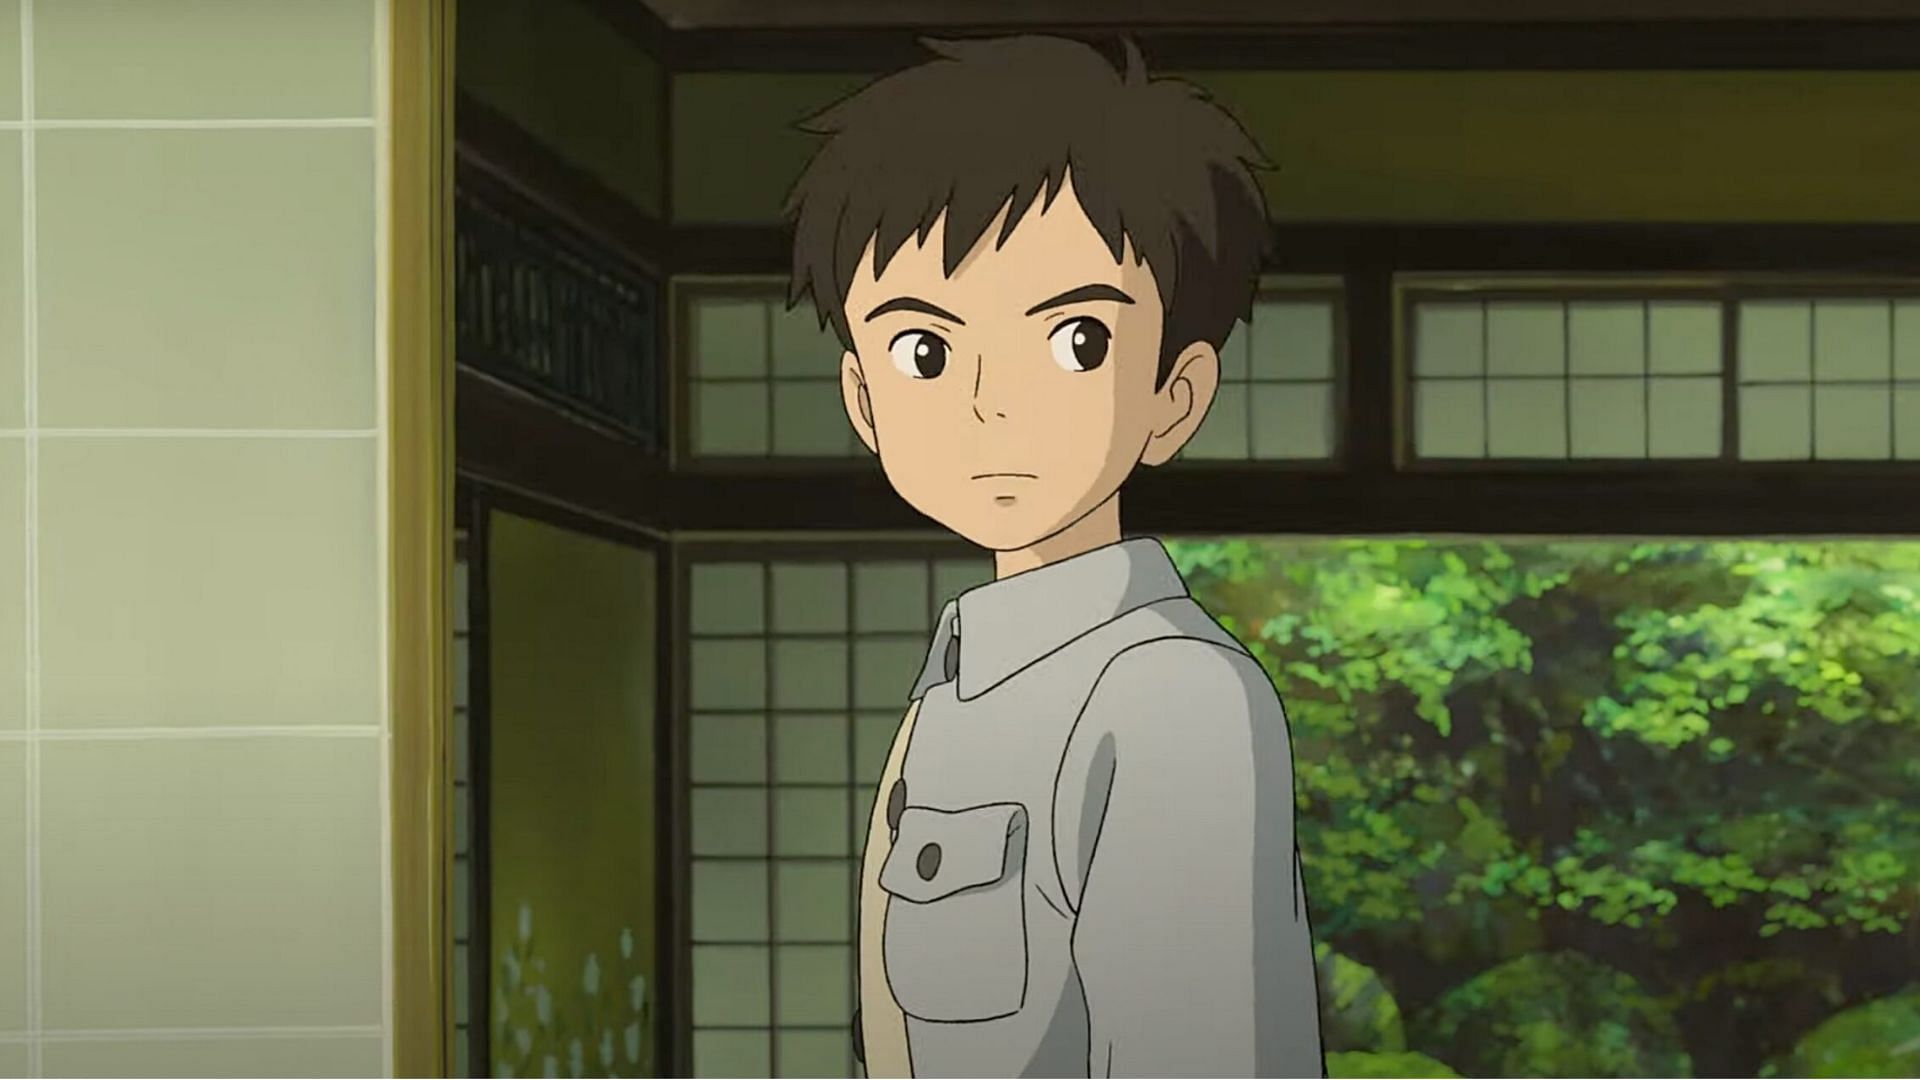 A snapshot from the movie (Image via Studio Ghibli)